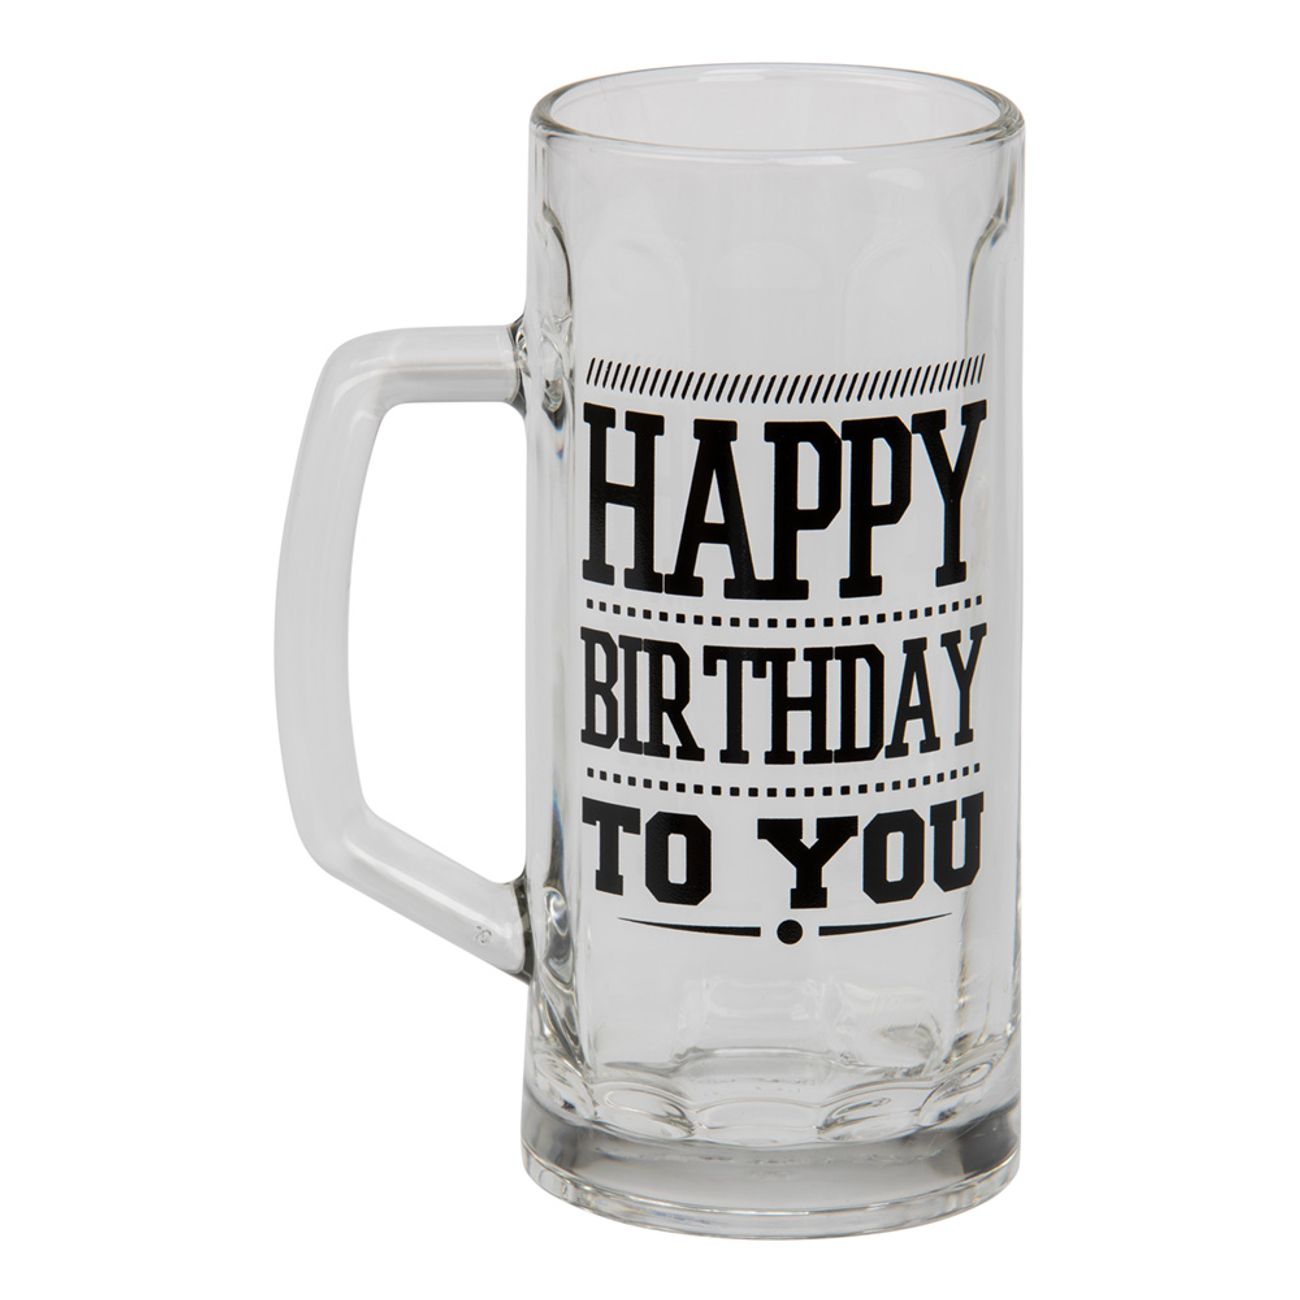 olsejdel-happy-birthday-to-you-1